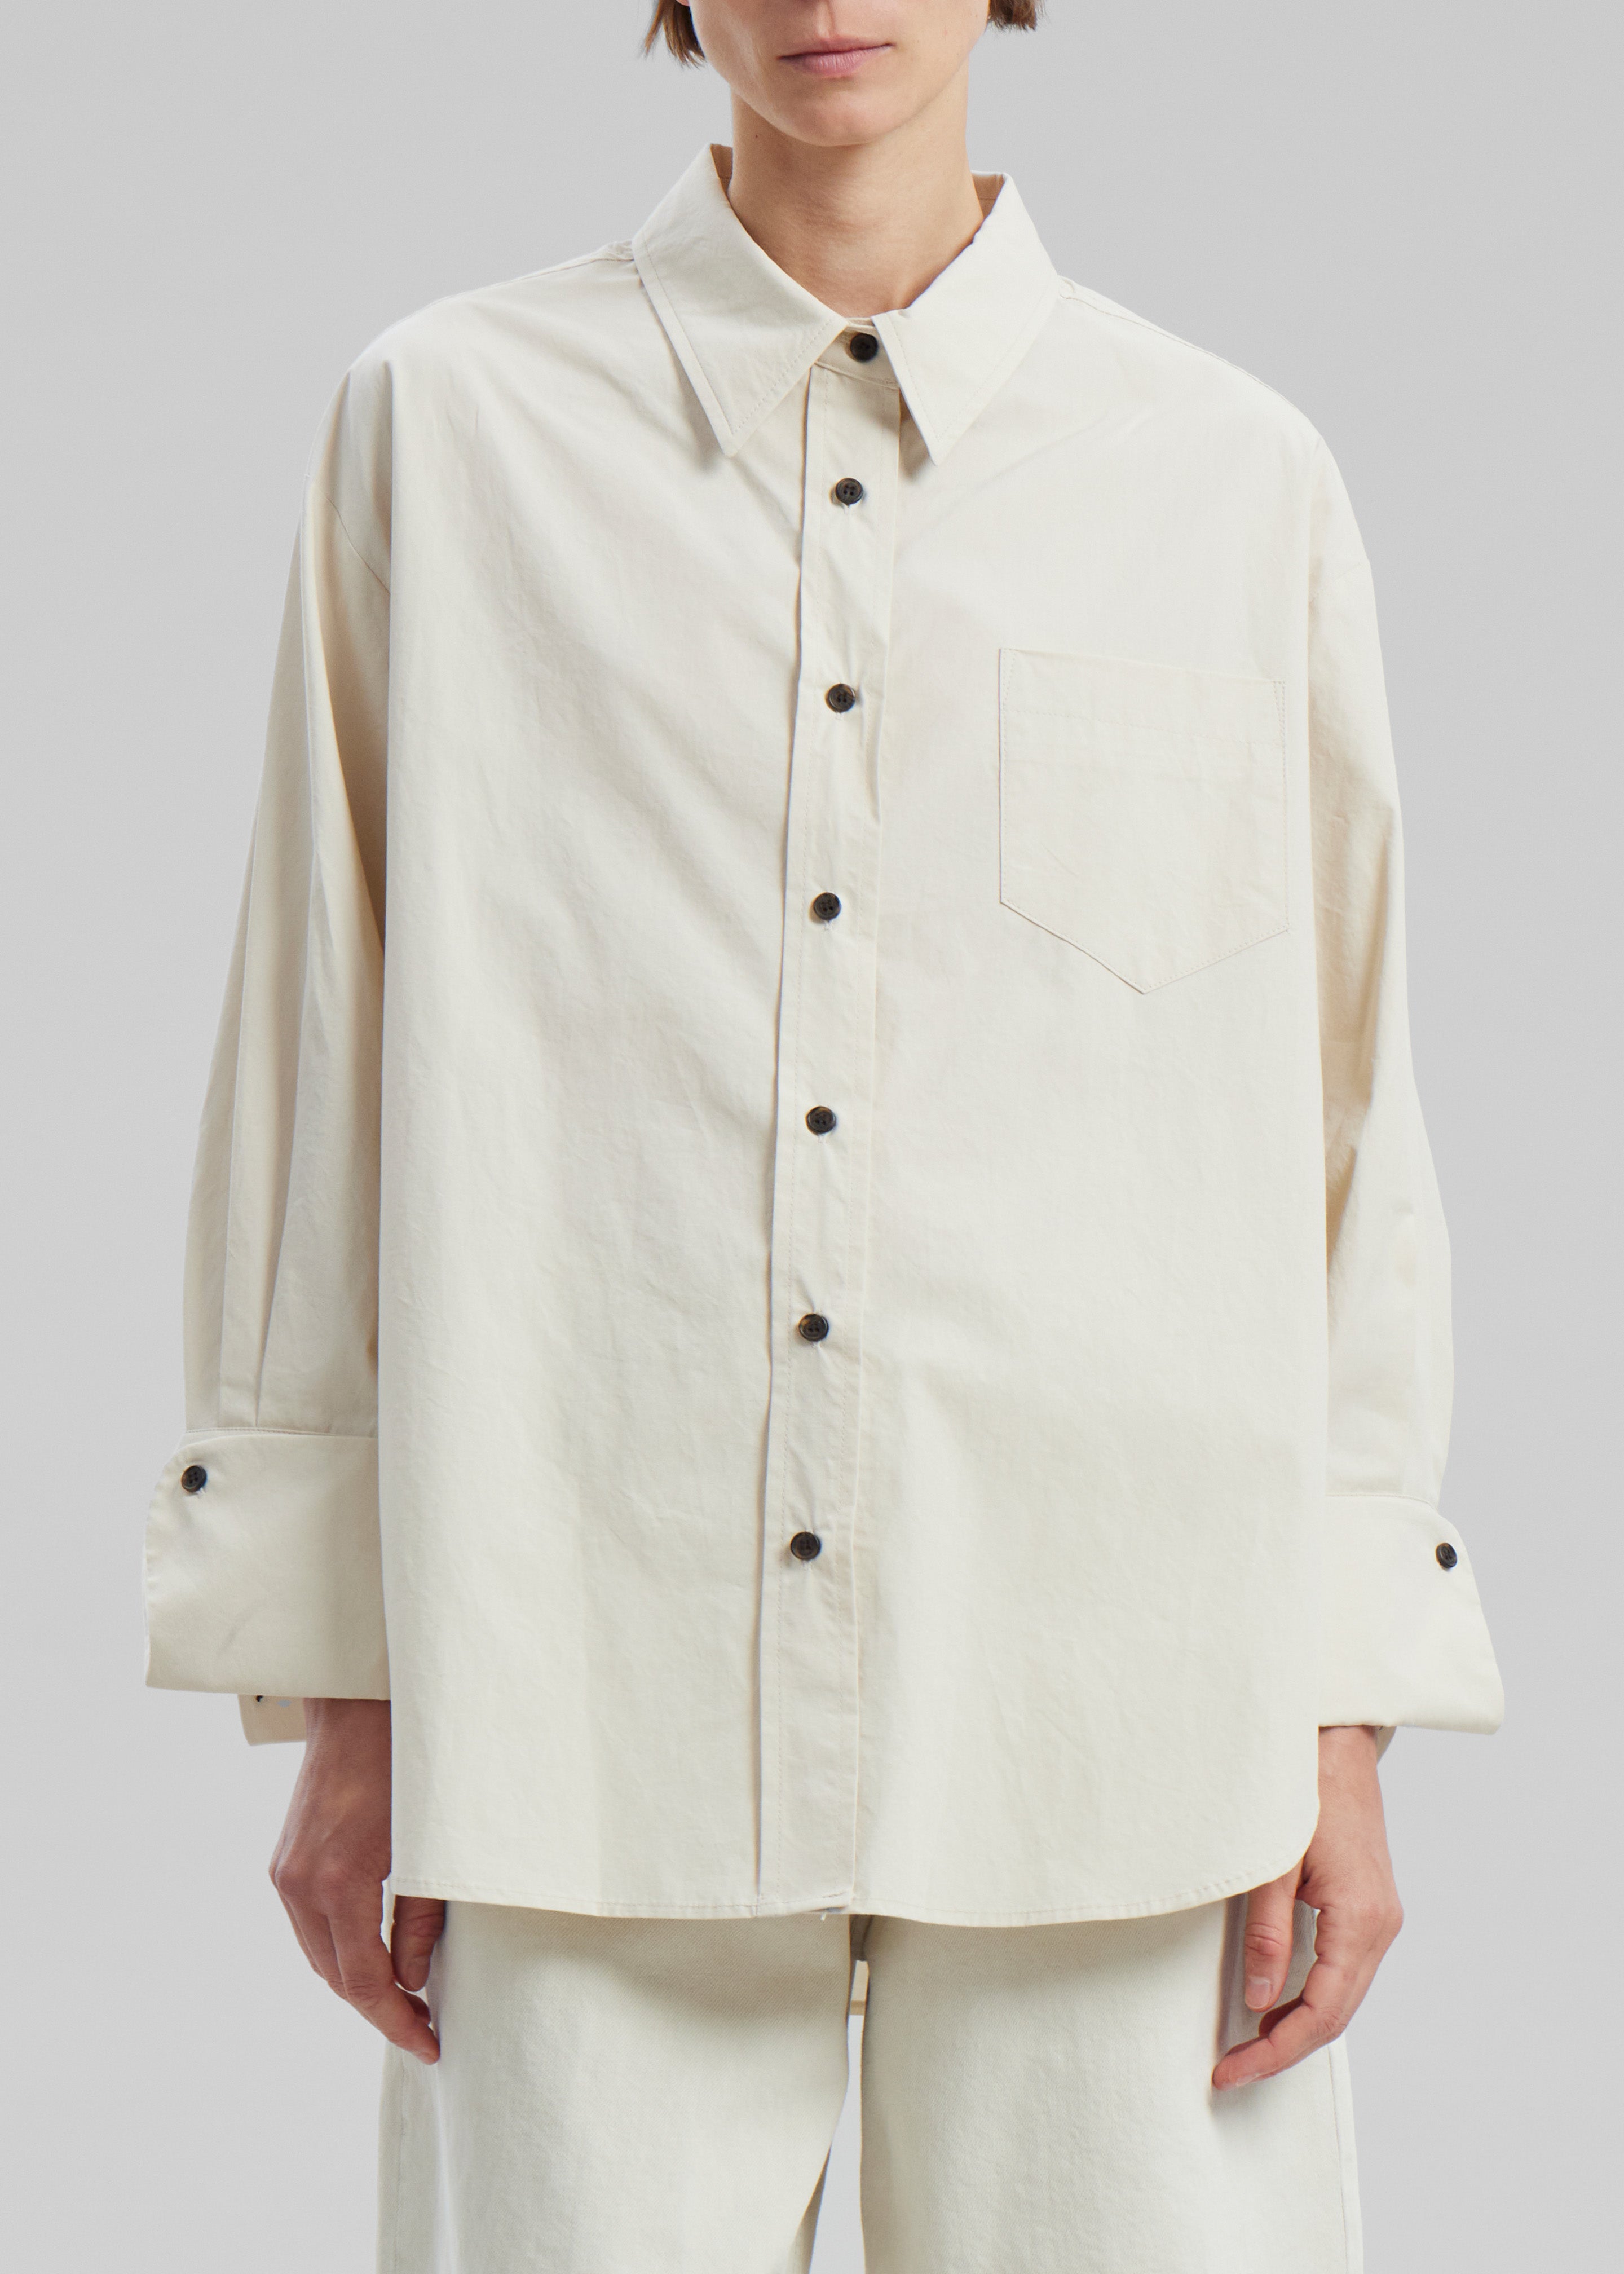 Zuri Boxy Button Up Shirt - Cream - 6